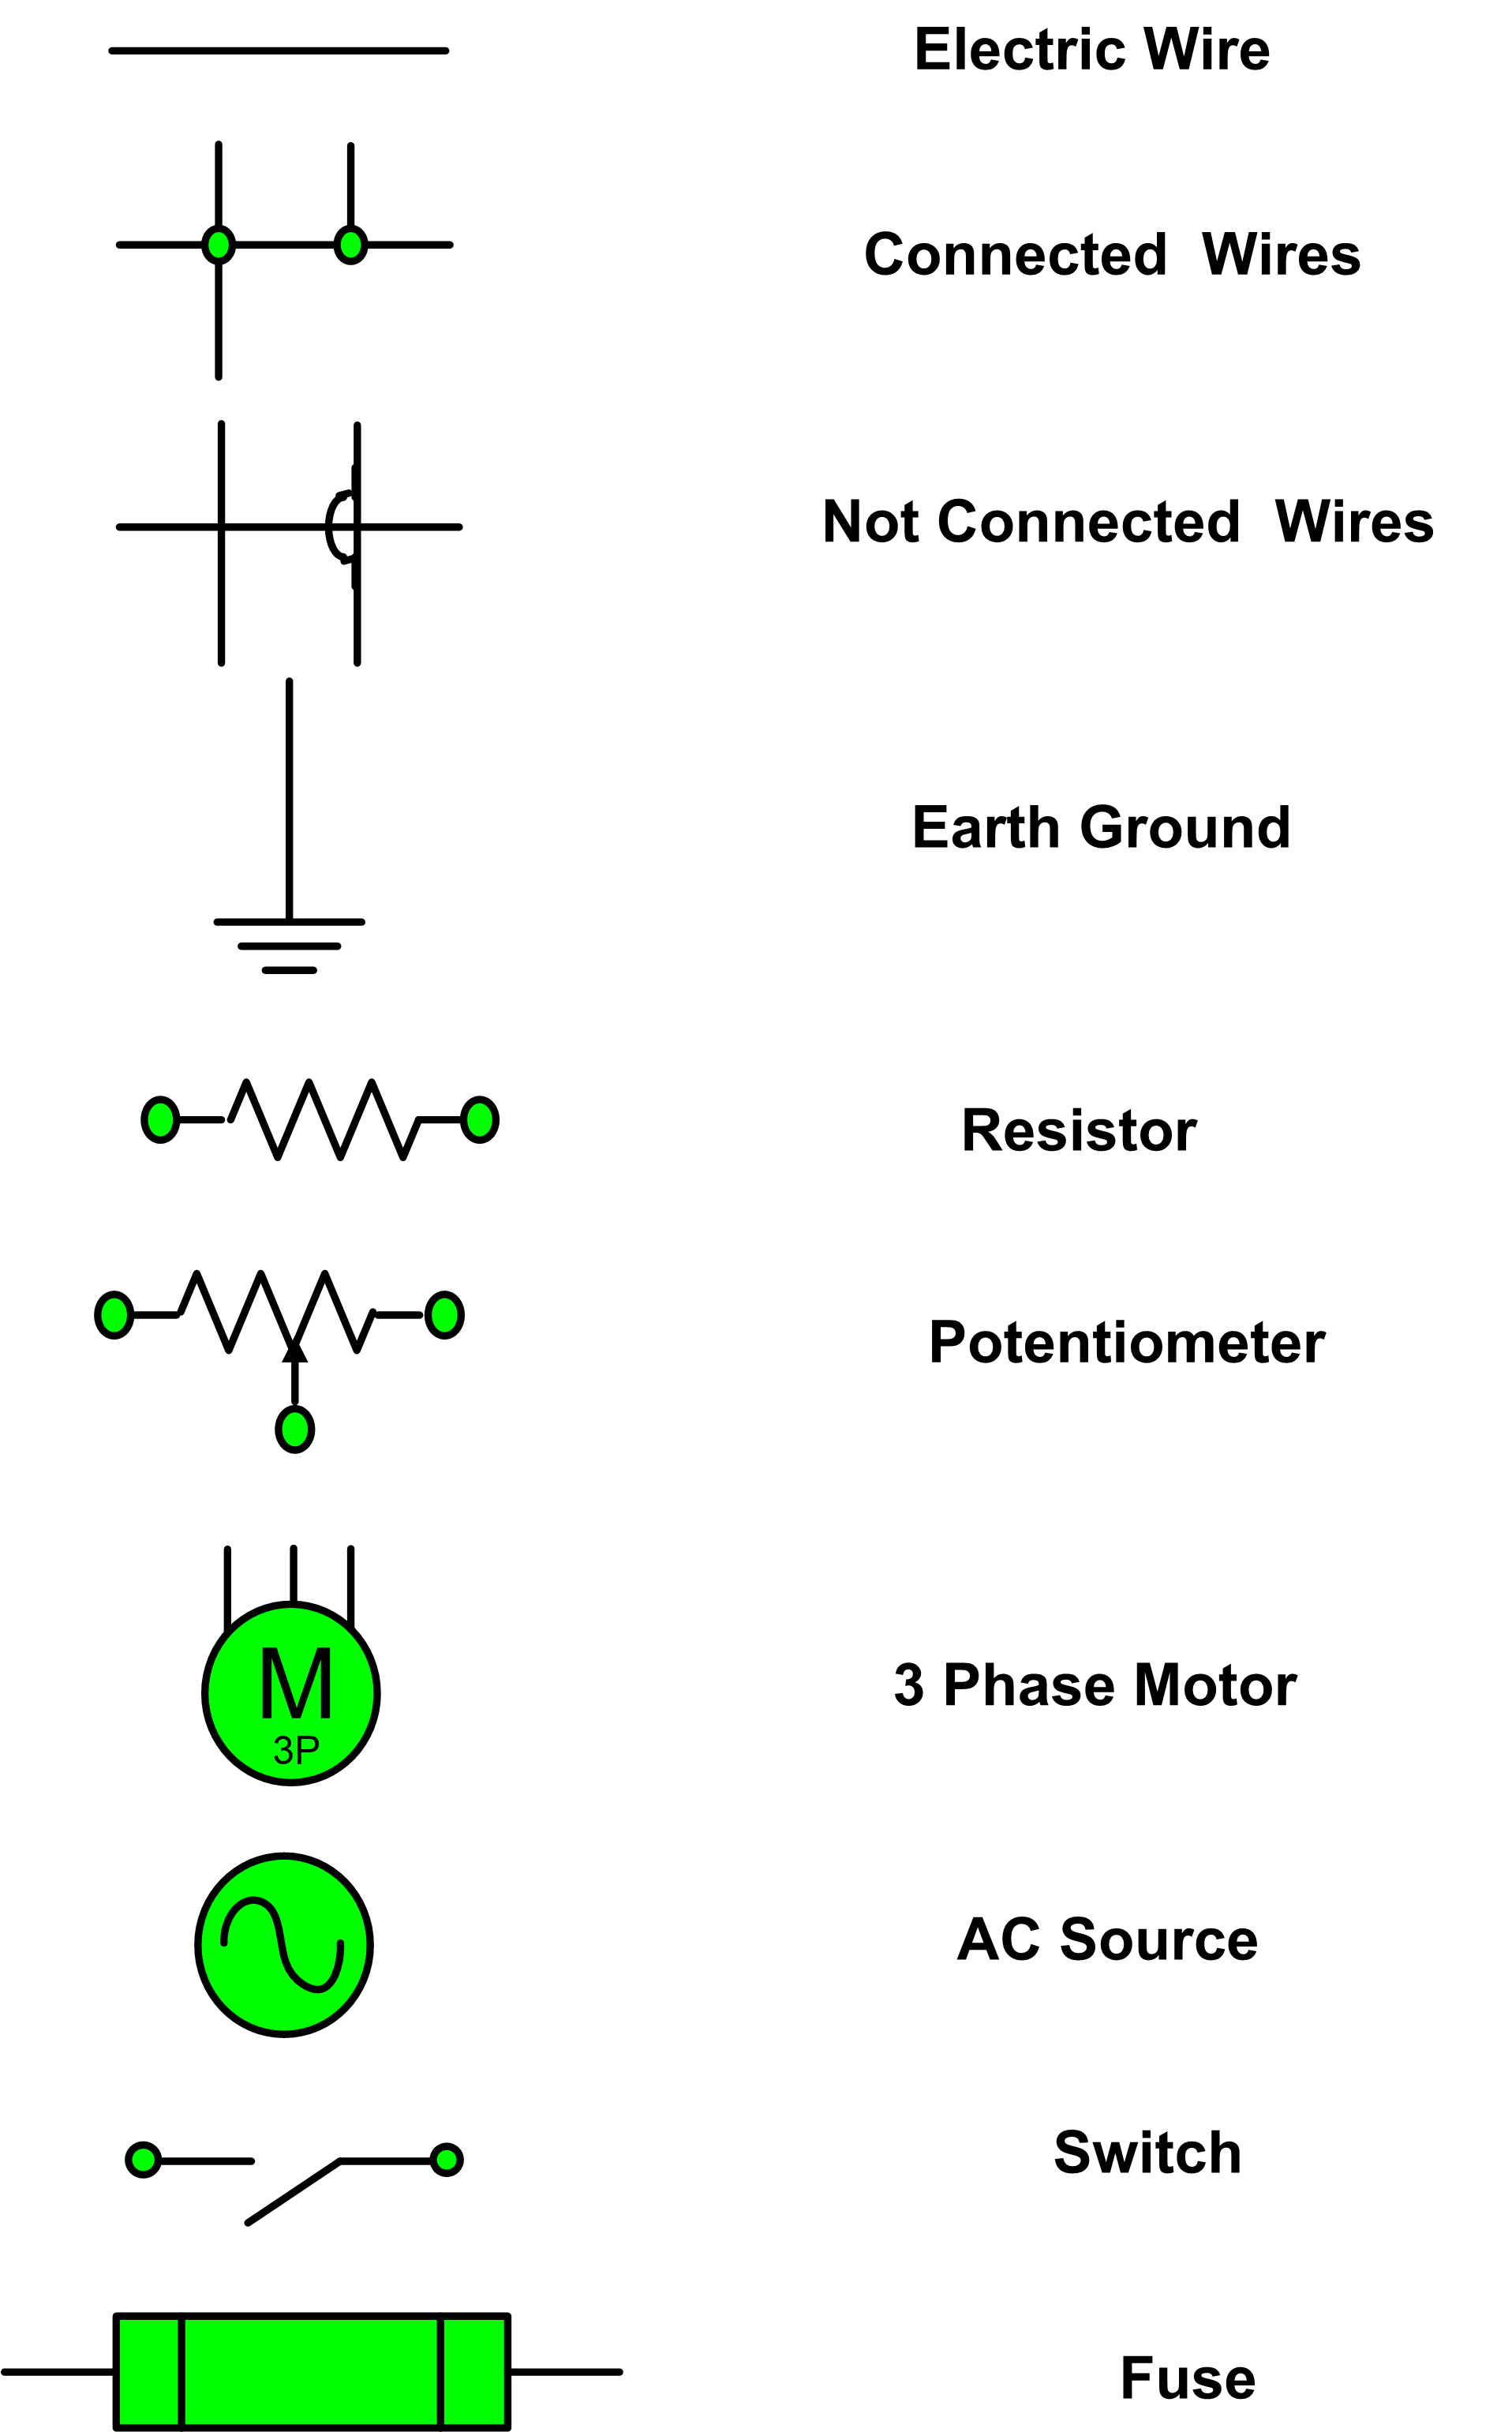 openoffice draw electrical symbols